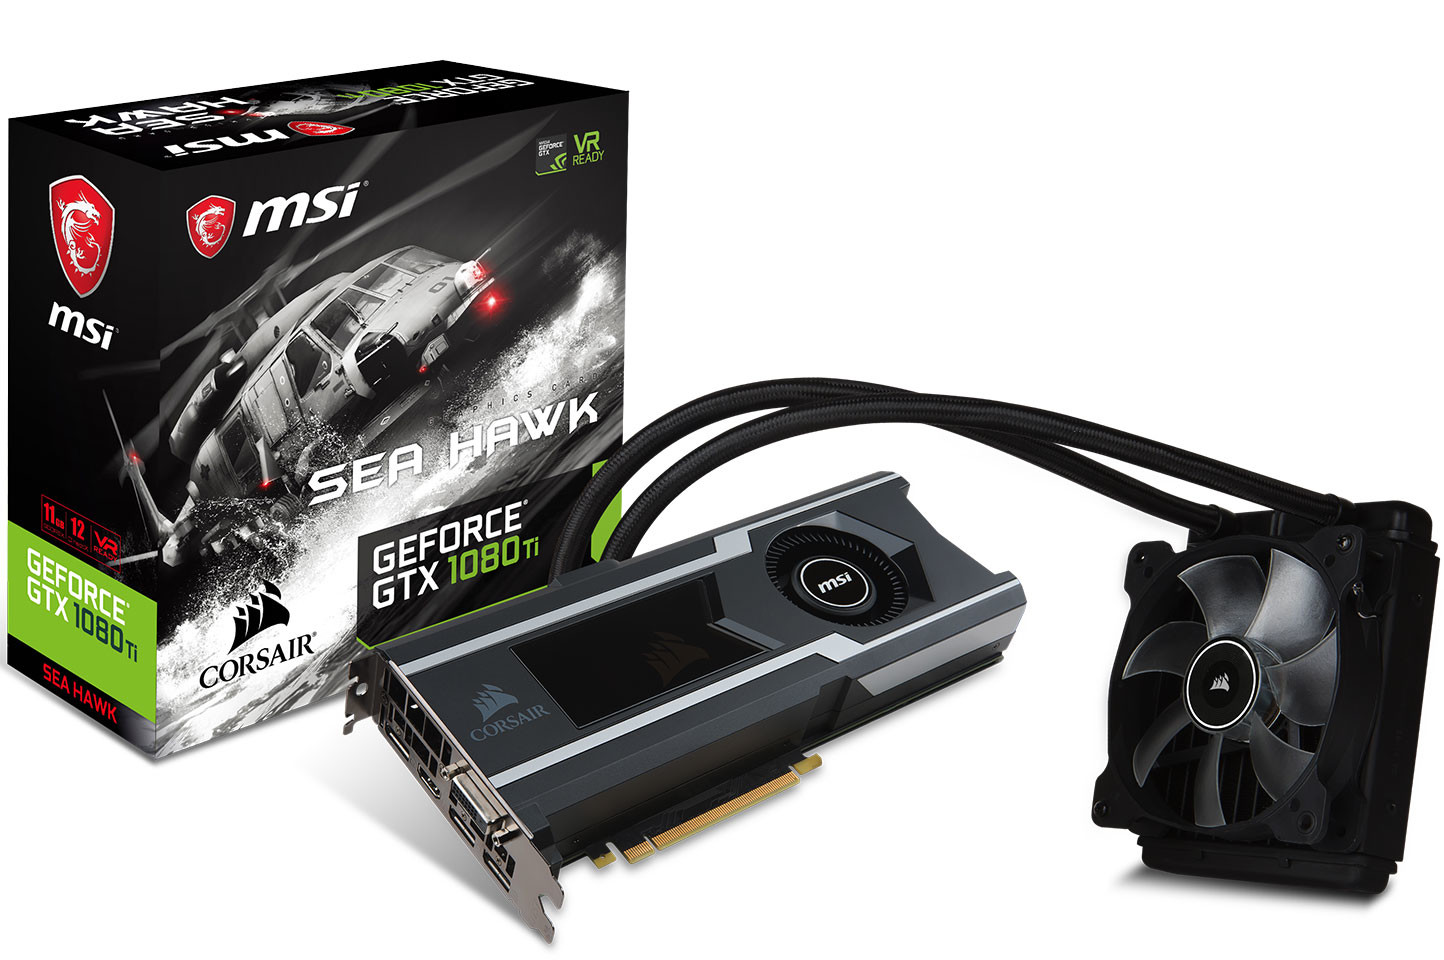 MSI Announces the GeForce GTX 1080 Ti Sea Hawk Gaming Graphics Card